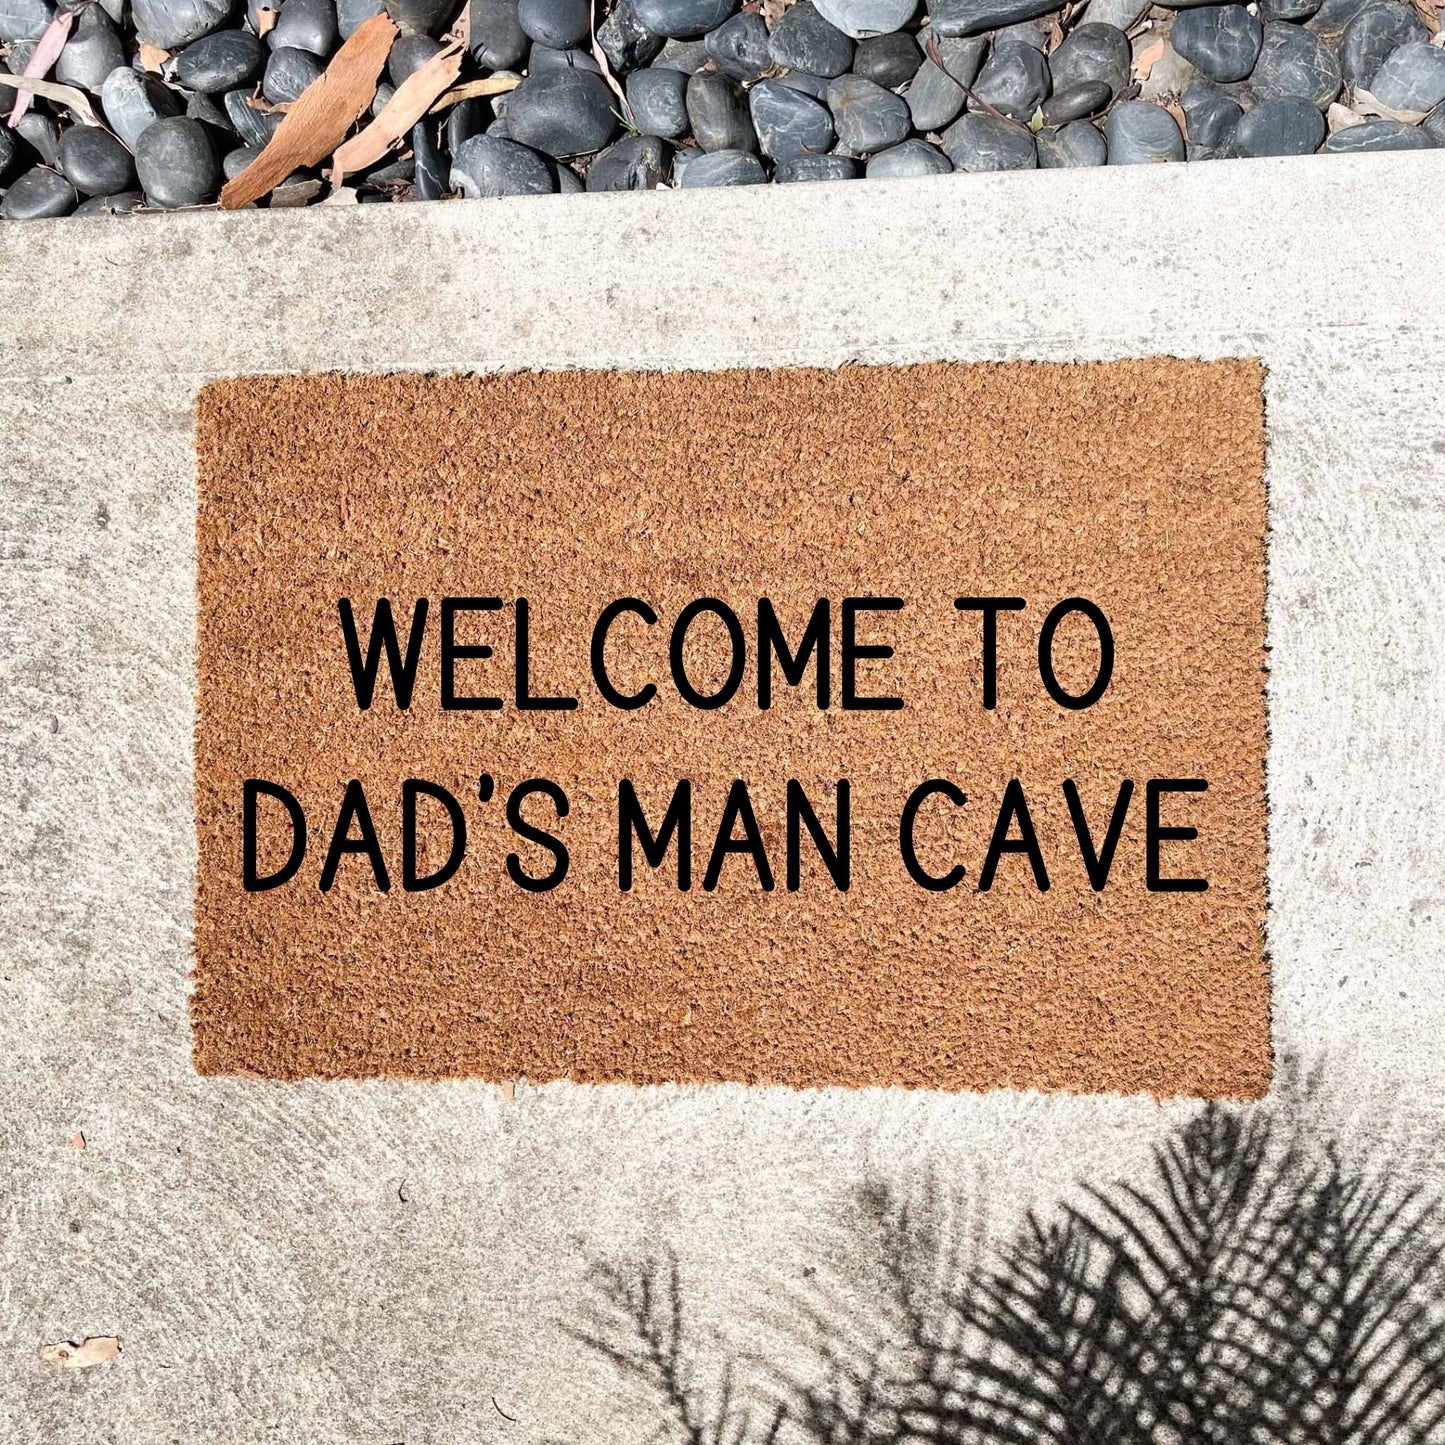 Dad's man cave doormat, fathers day gift, gifts for him, birthday gift, dad doormat, grandpa doormat